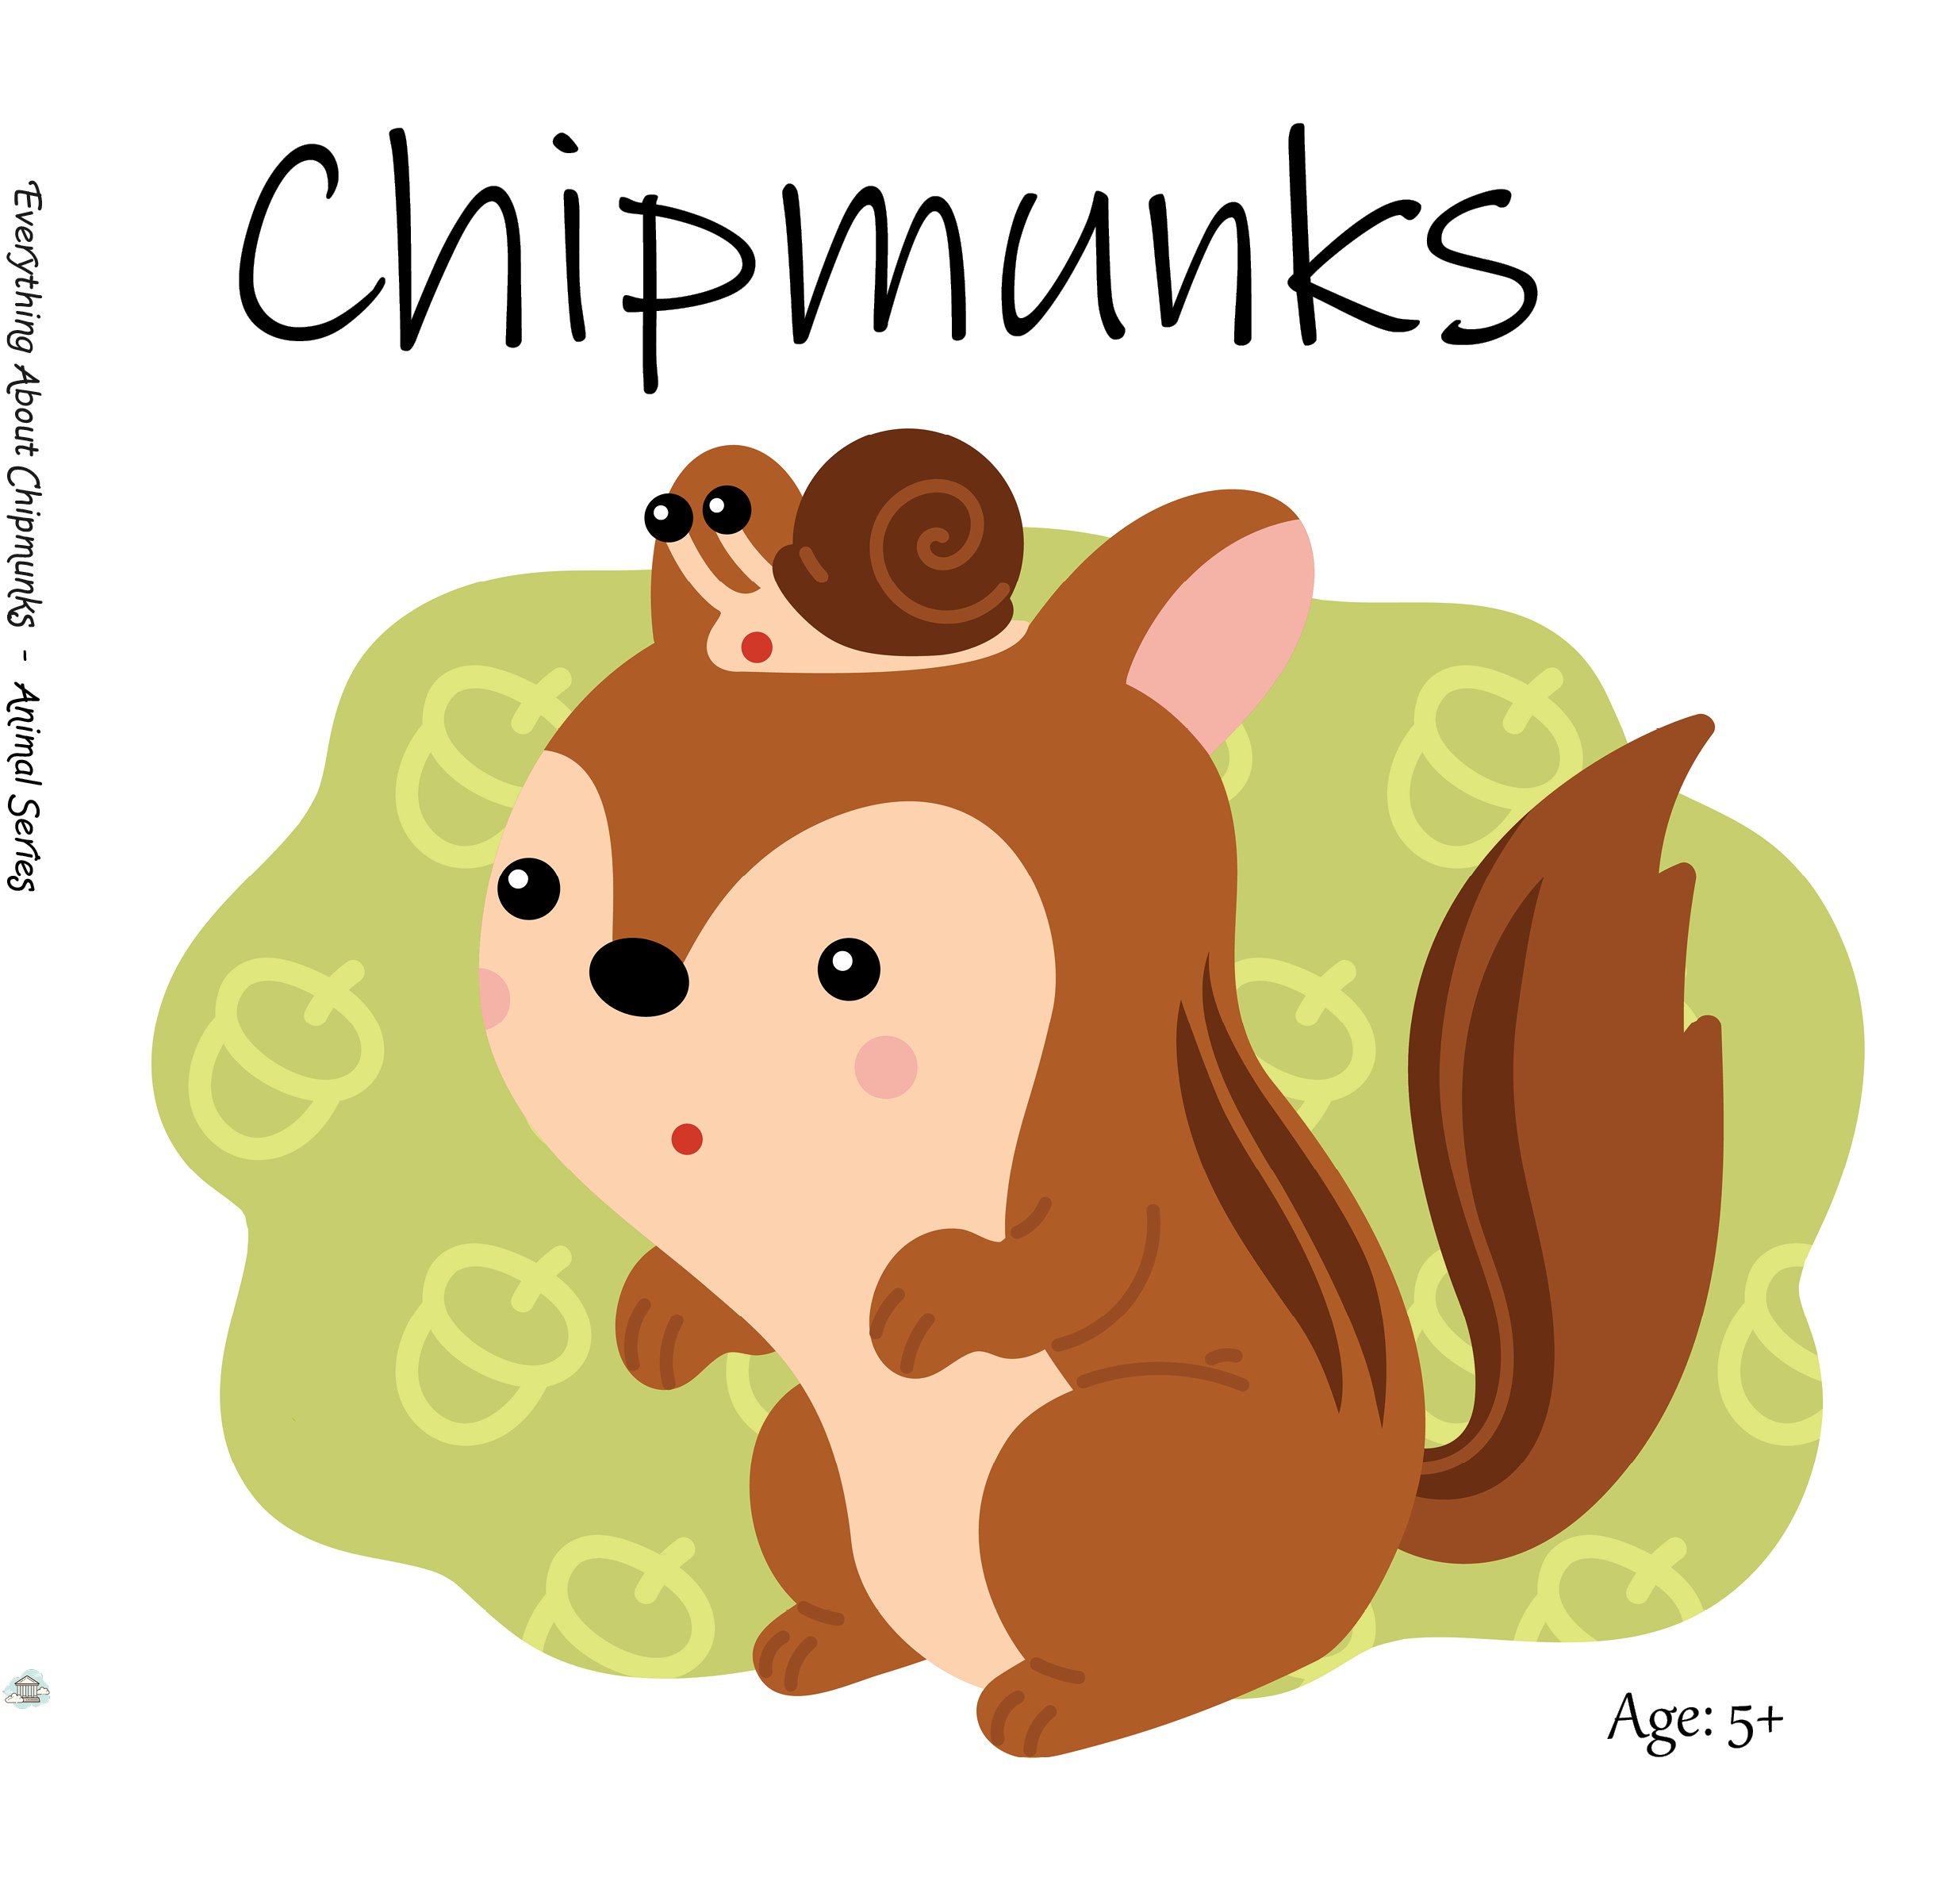 Everything about Chipmunks.jpg